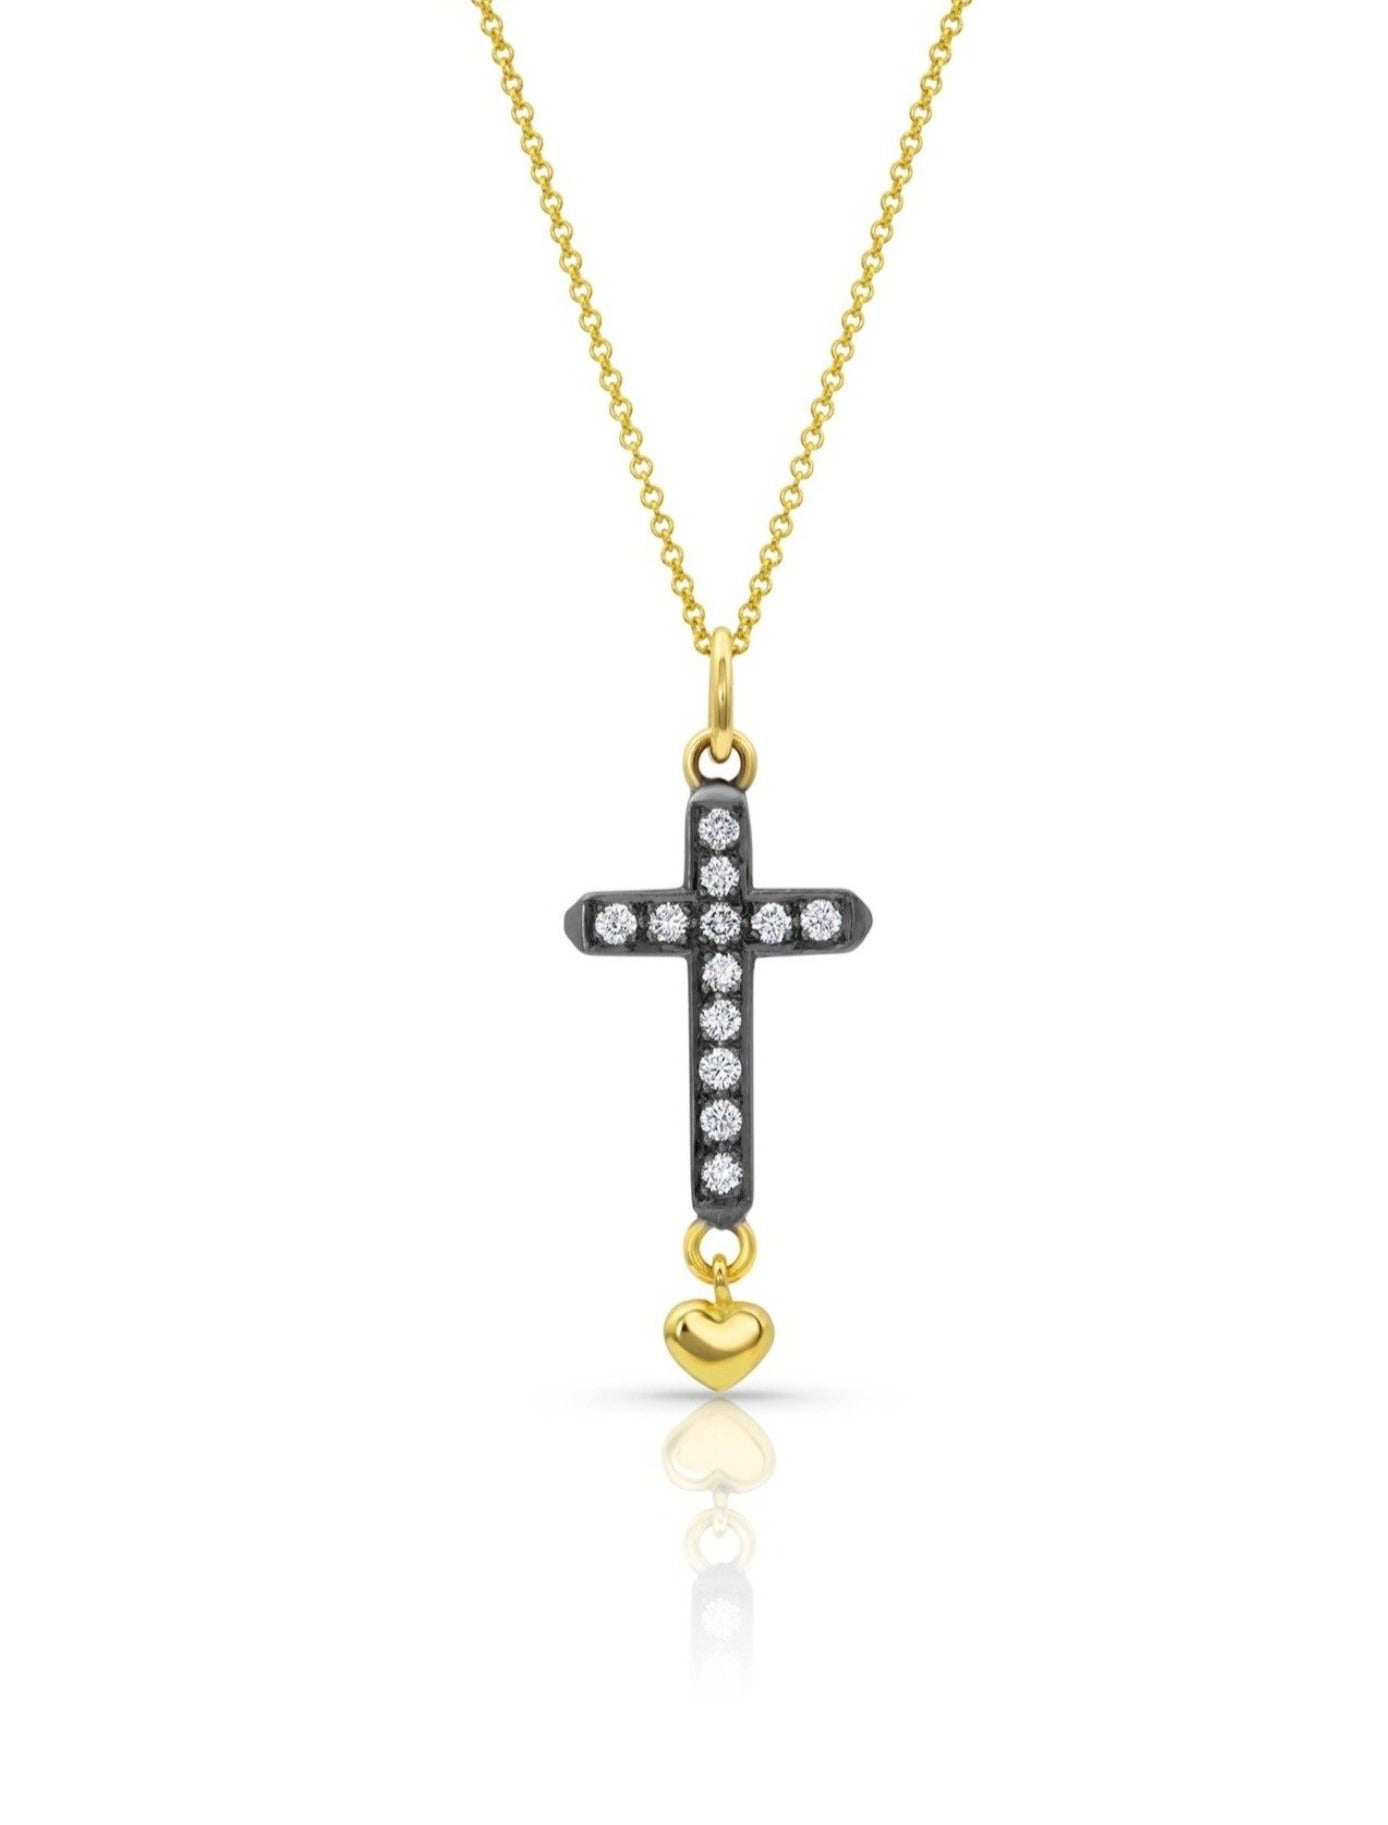 Gold and Diamond Cross Pendant - Goldhaus & Alexander Jewelry Design